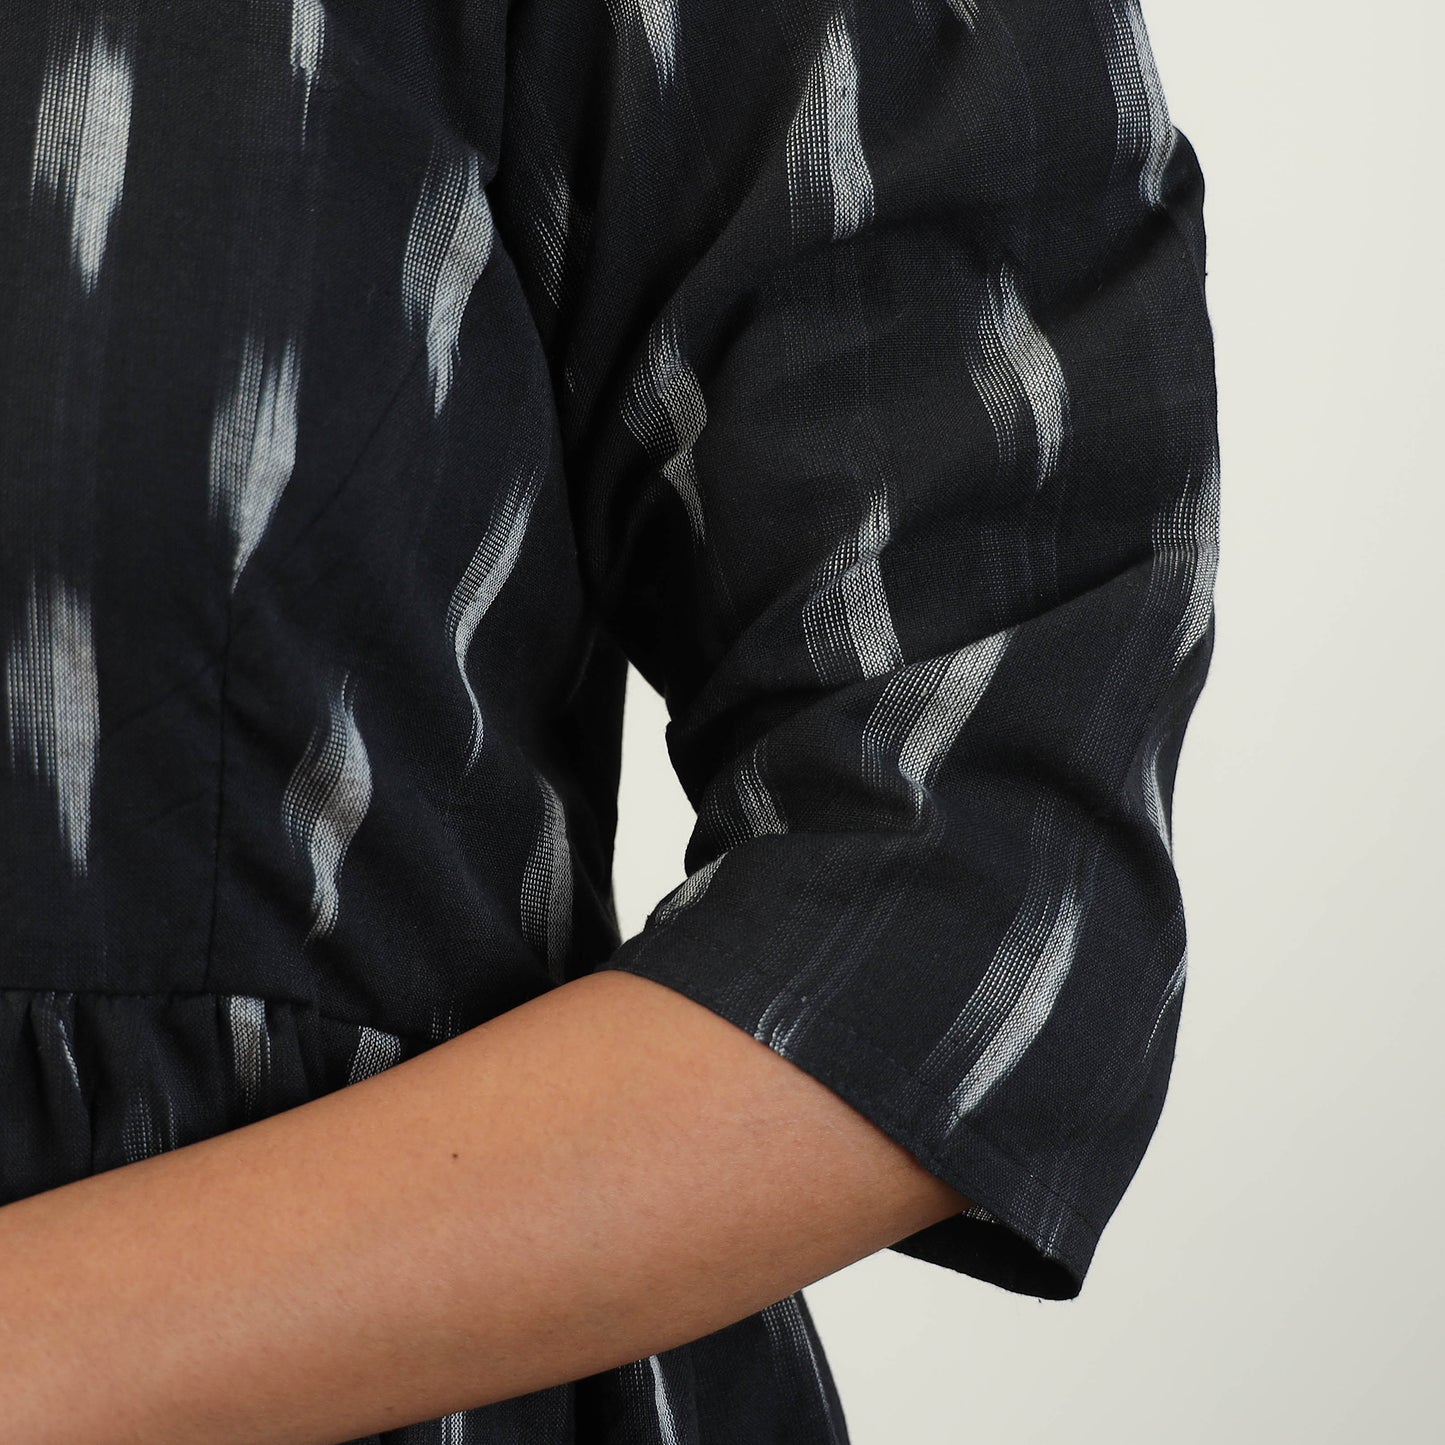 Black - Pochampally Ikat Weave Cotton Dress 08